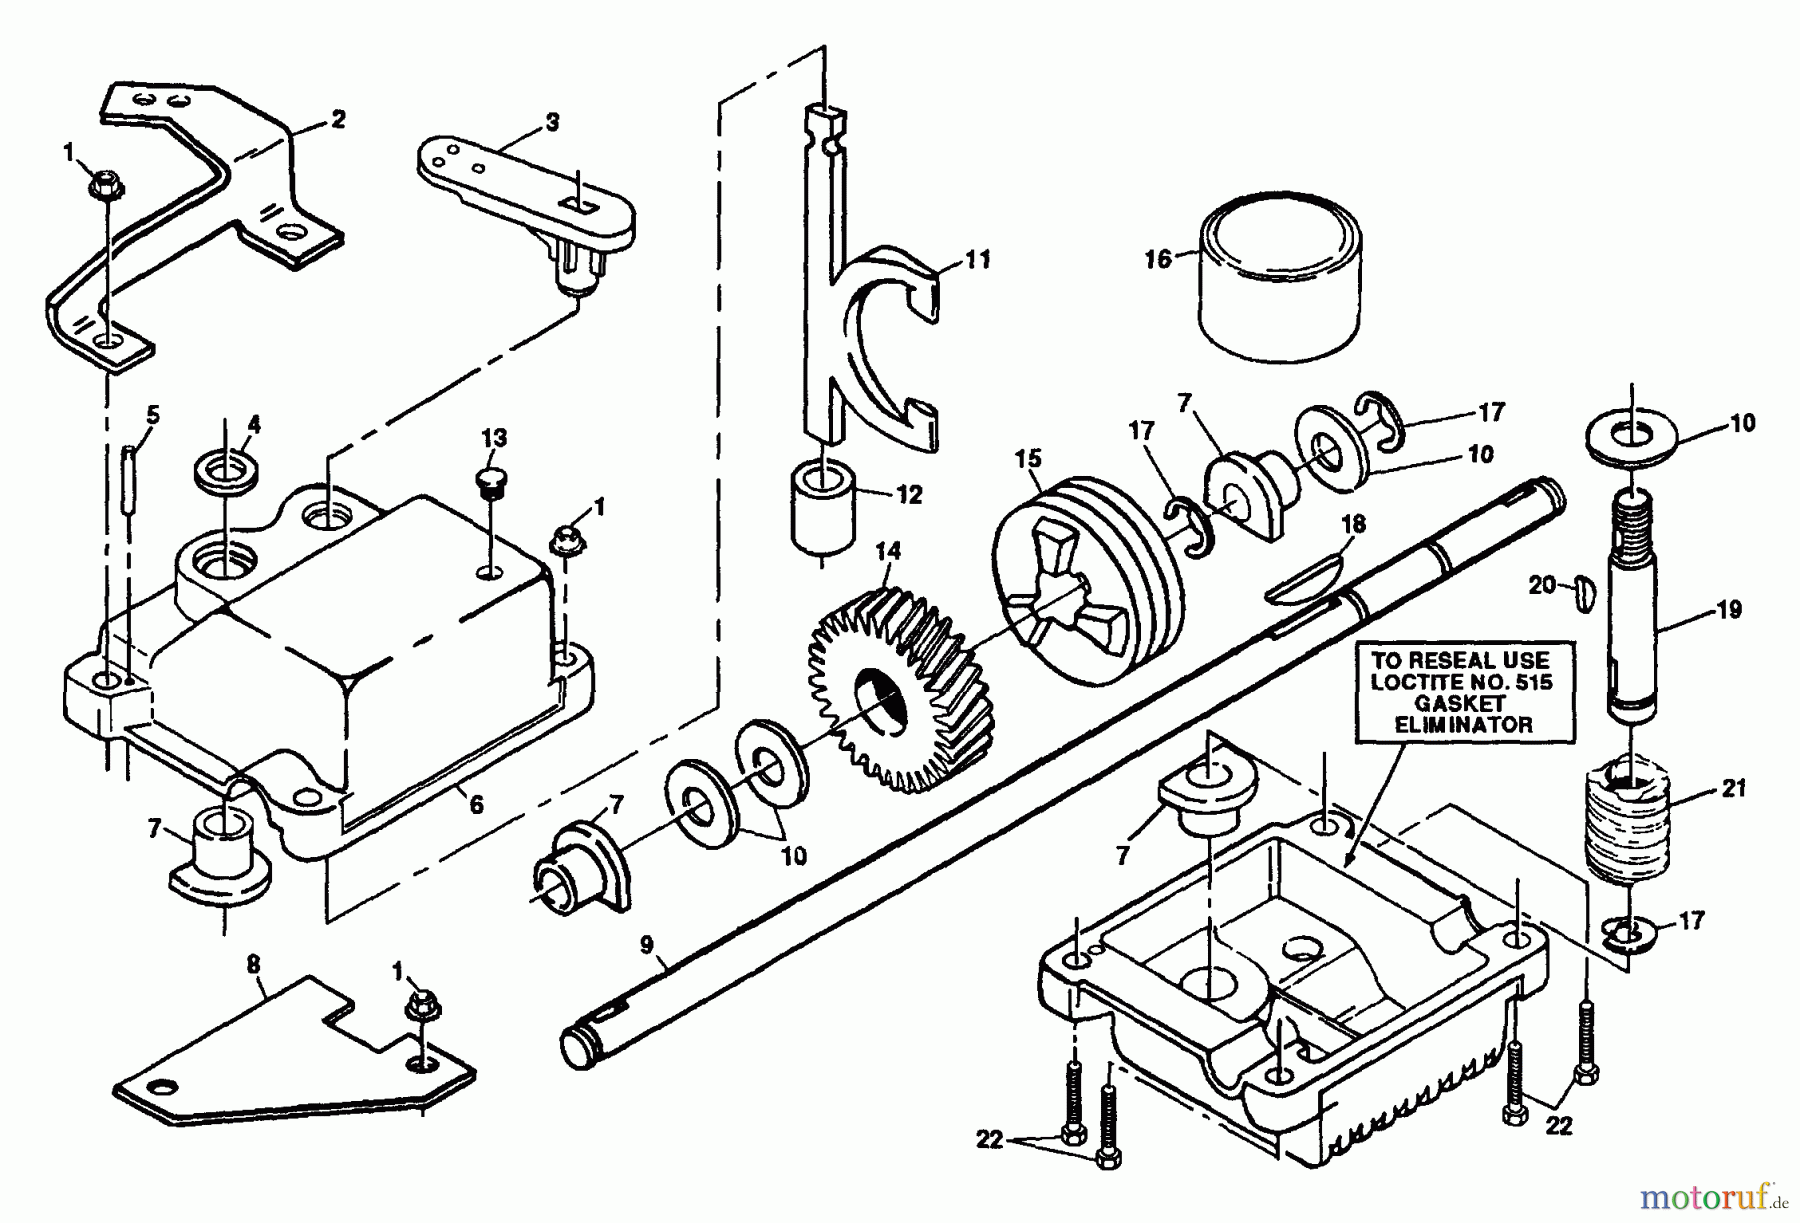  Husqvarna Rasenmäher H56 SFC (954050821) - Husqvarna Walk-Behind Mower (1992-01 & After) Gear Case Assembly